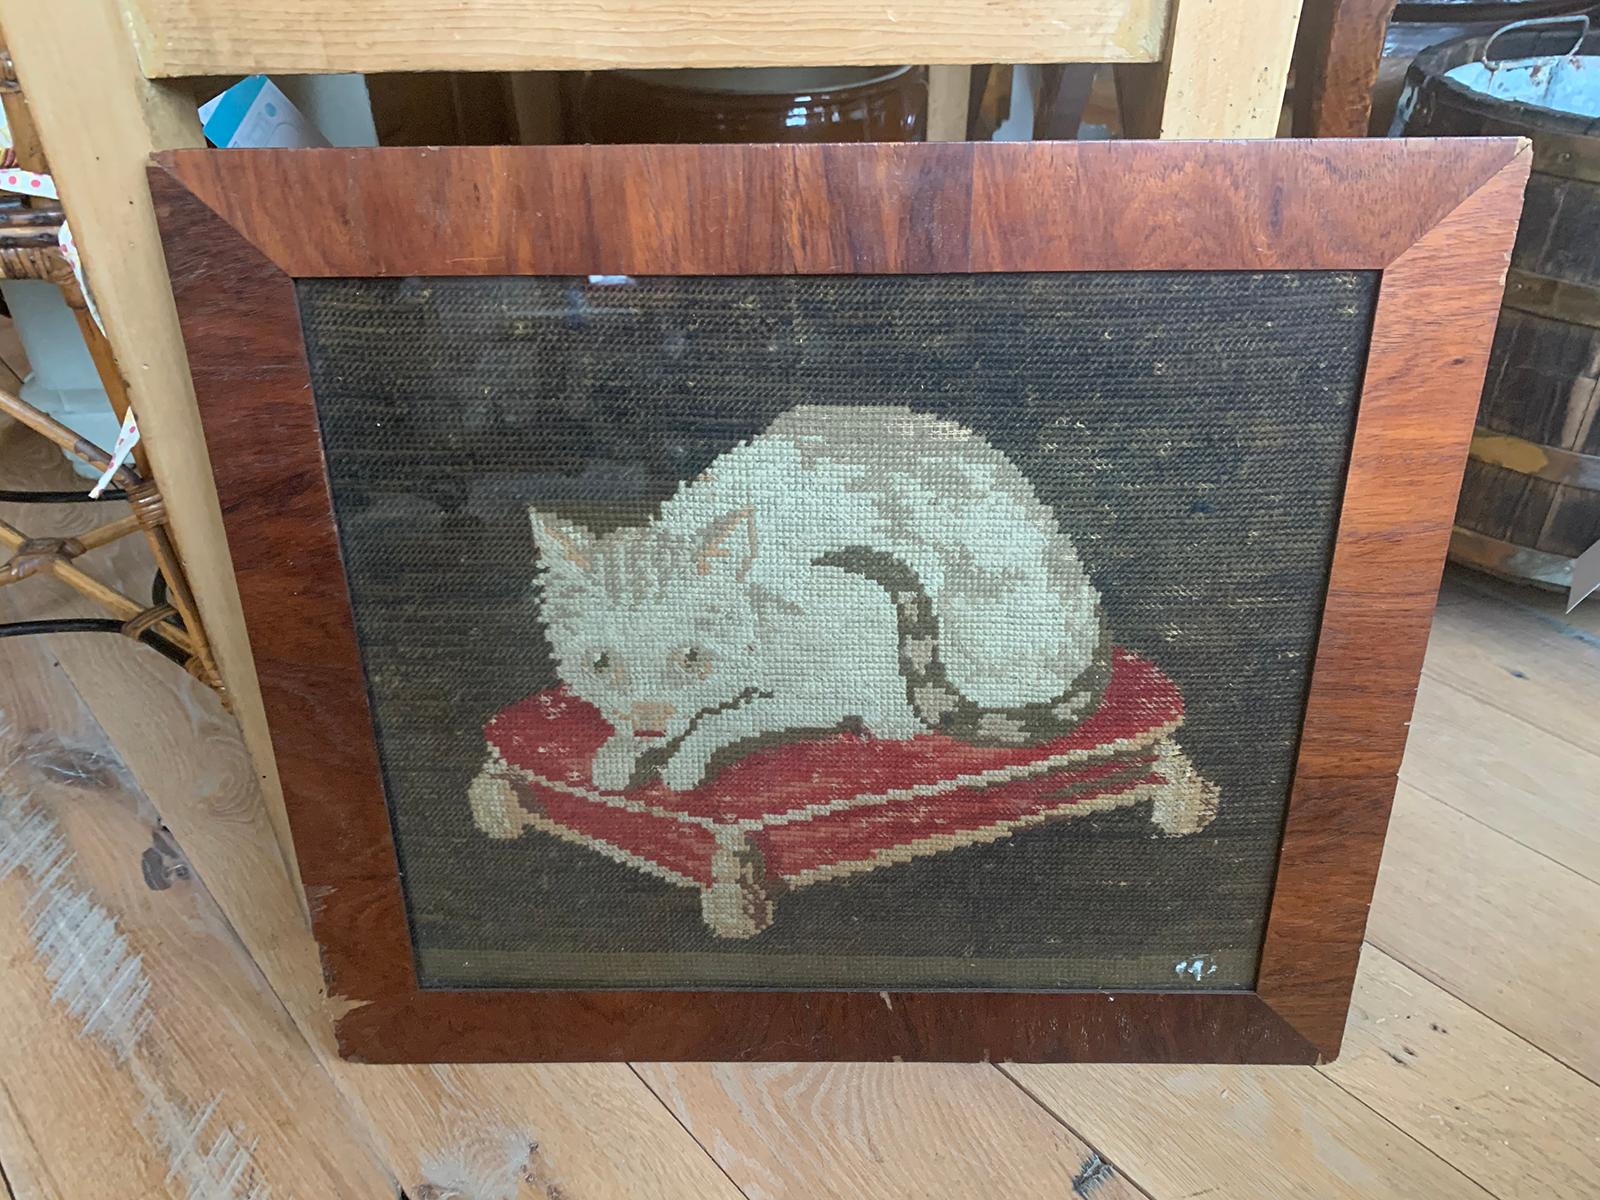 19th century needlework cat in burled wood frame.